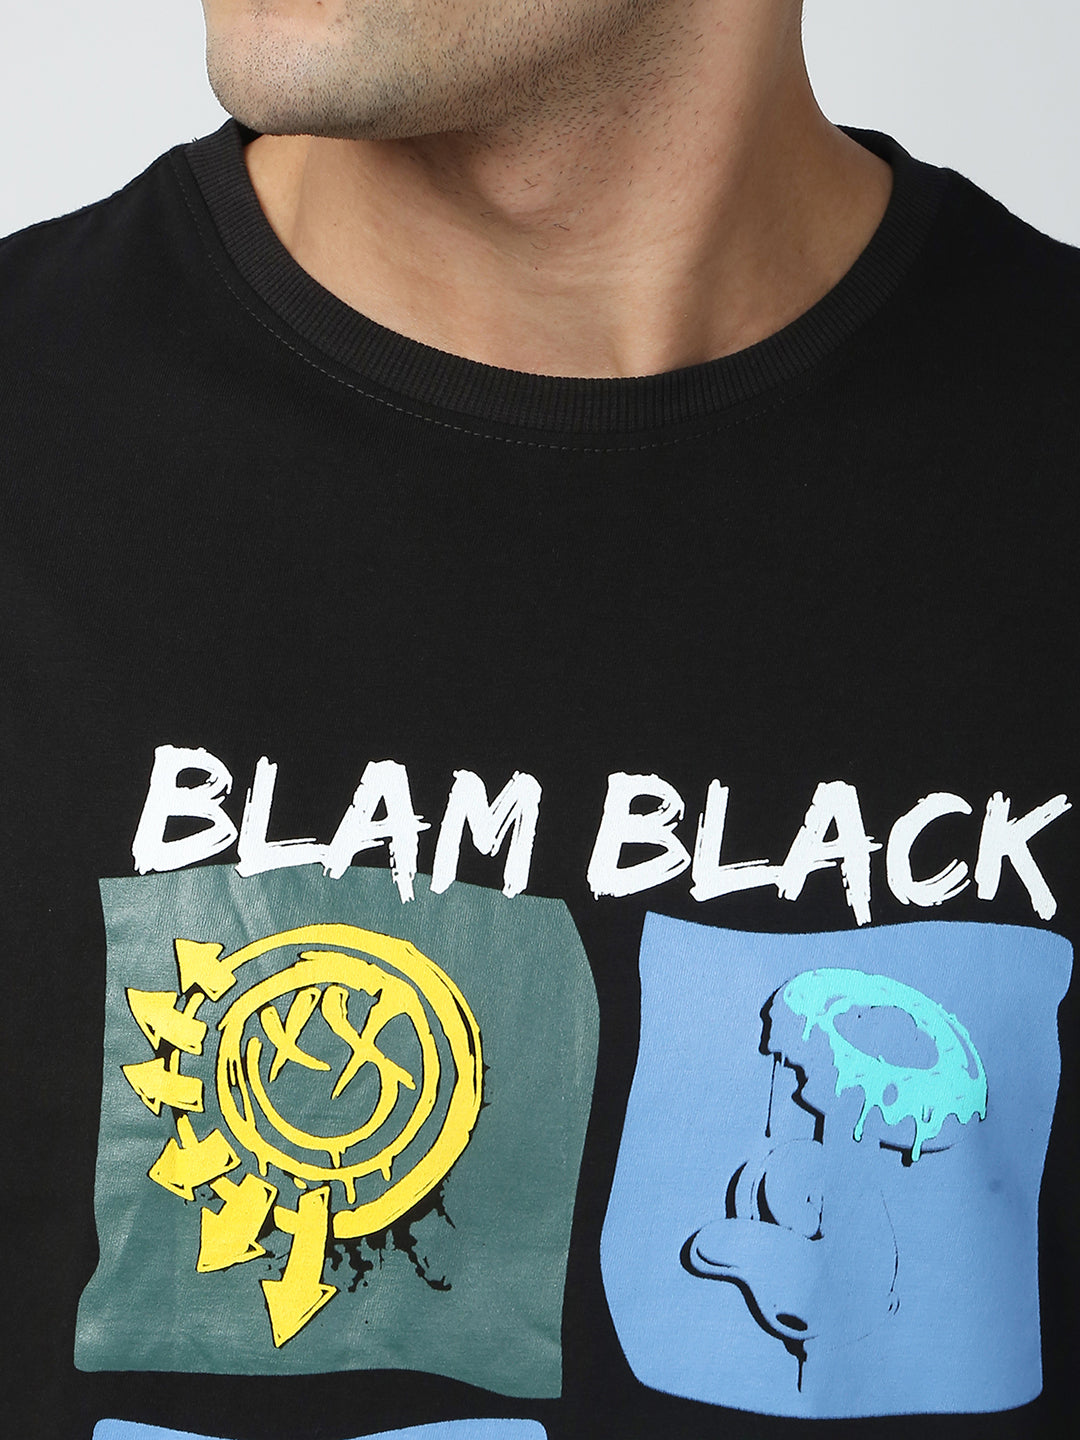 Buy Blamblack Men's Baggy Black Color Printed Round Neck T-Shirt